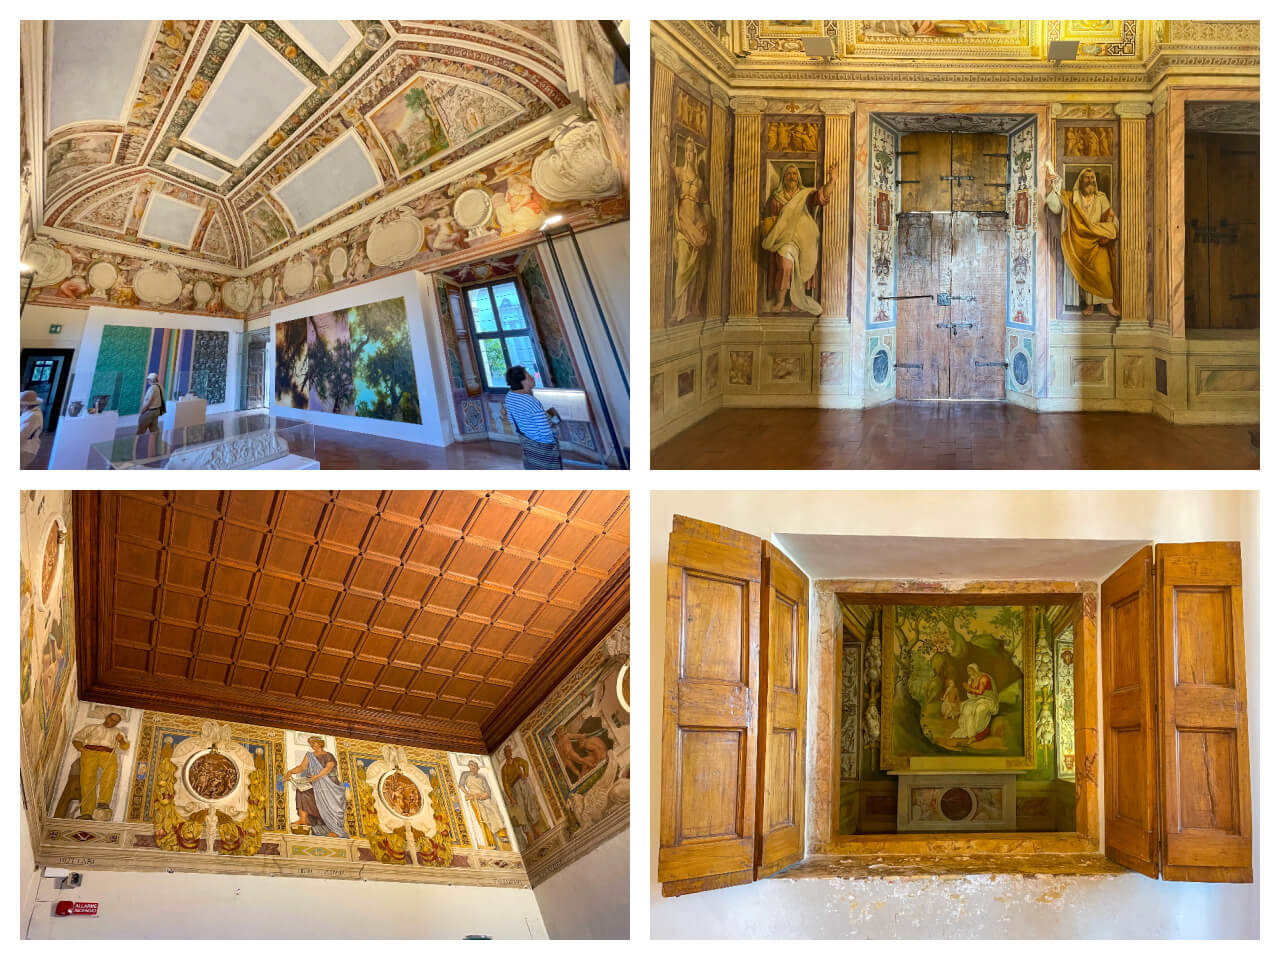 Inside Villa d'Este, Tivoli: Guide to Renaissance Splendors Within